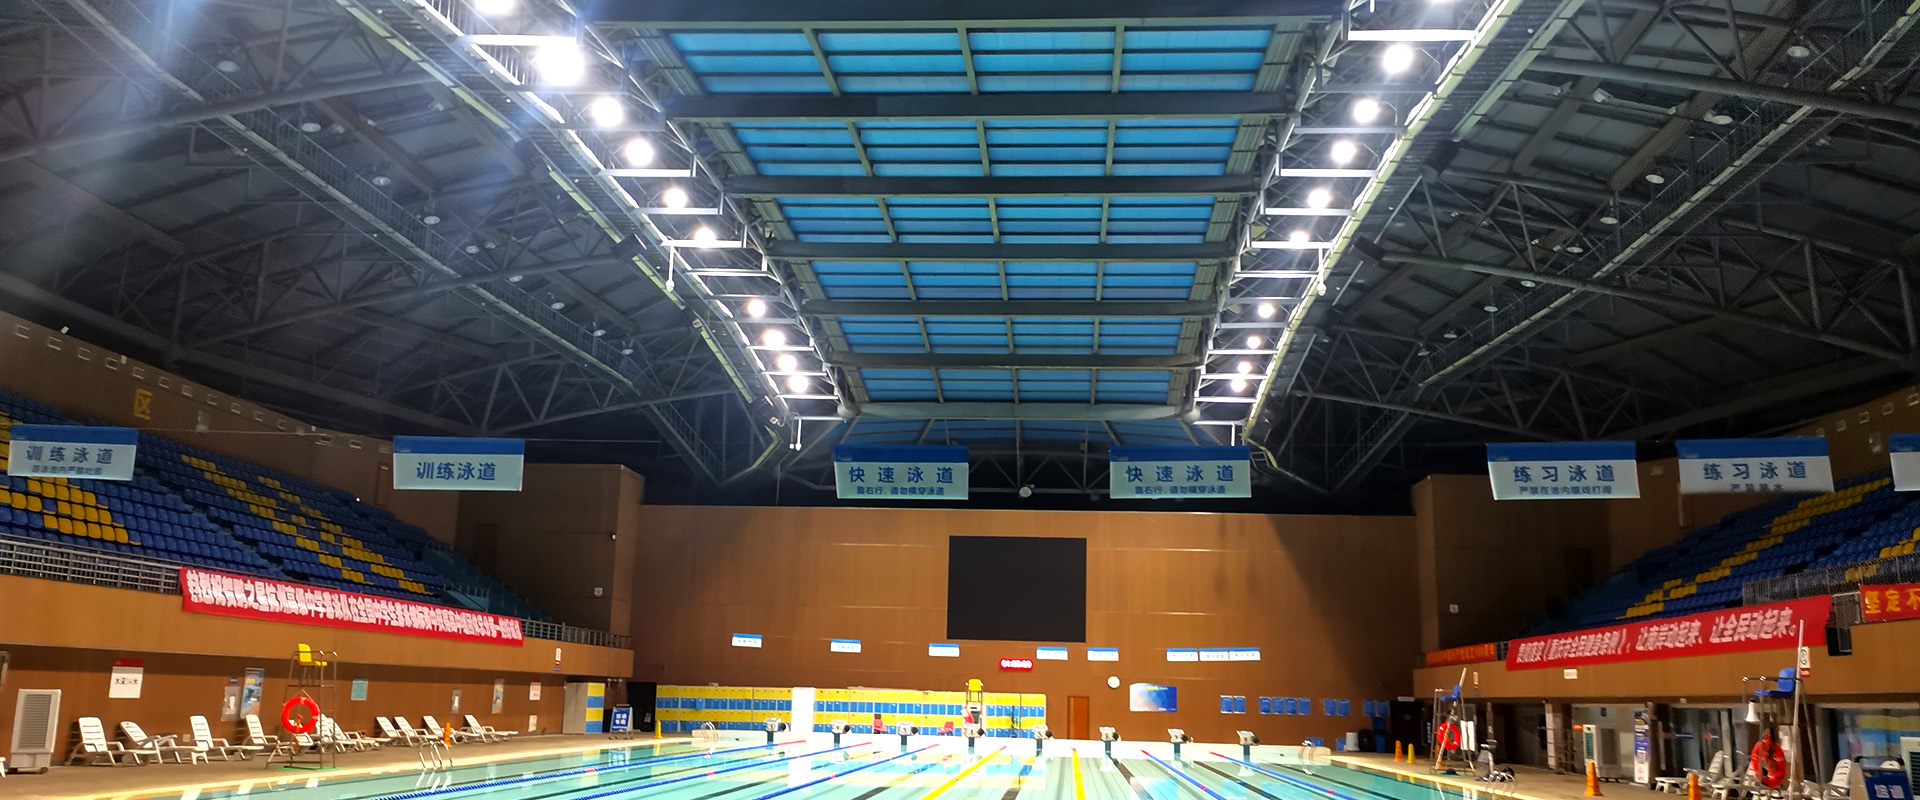 Swimming venue lighting scheme